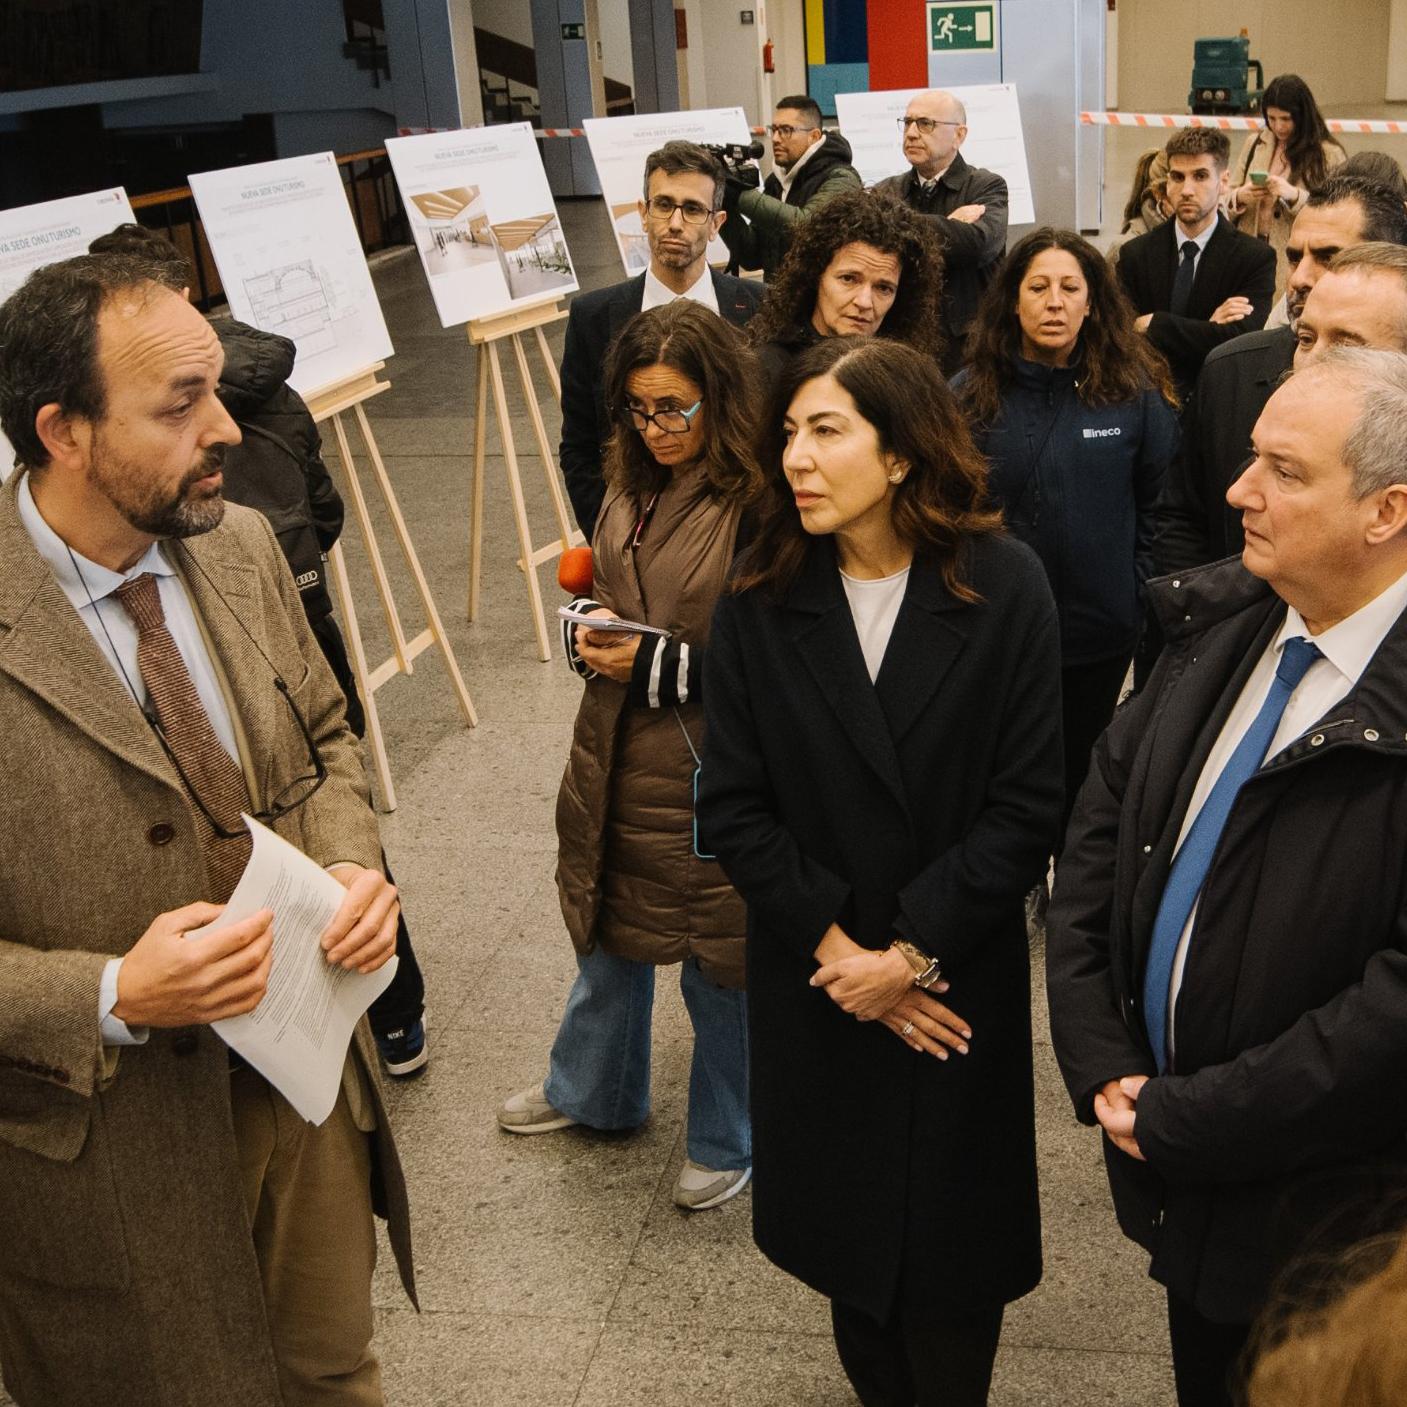 The project was presented by Julián Jiménez de Tejada.